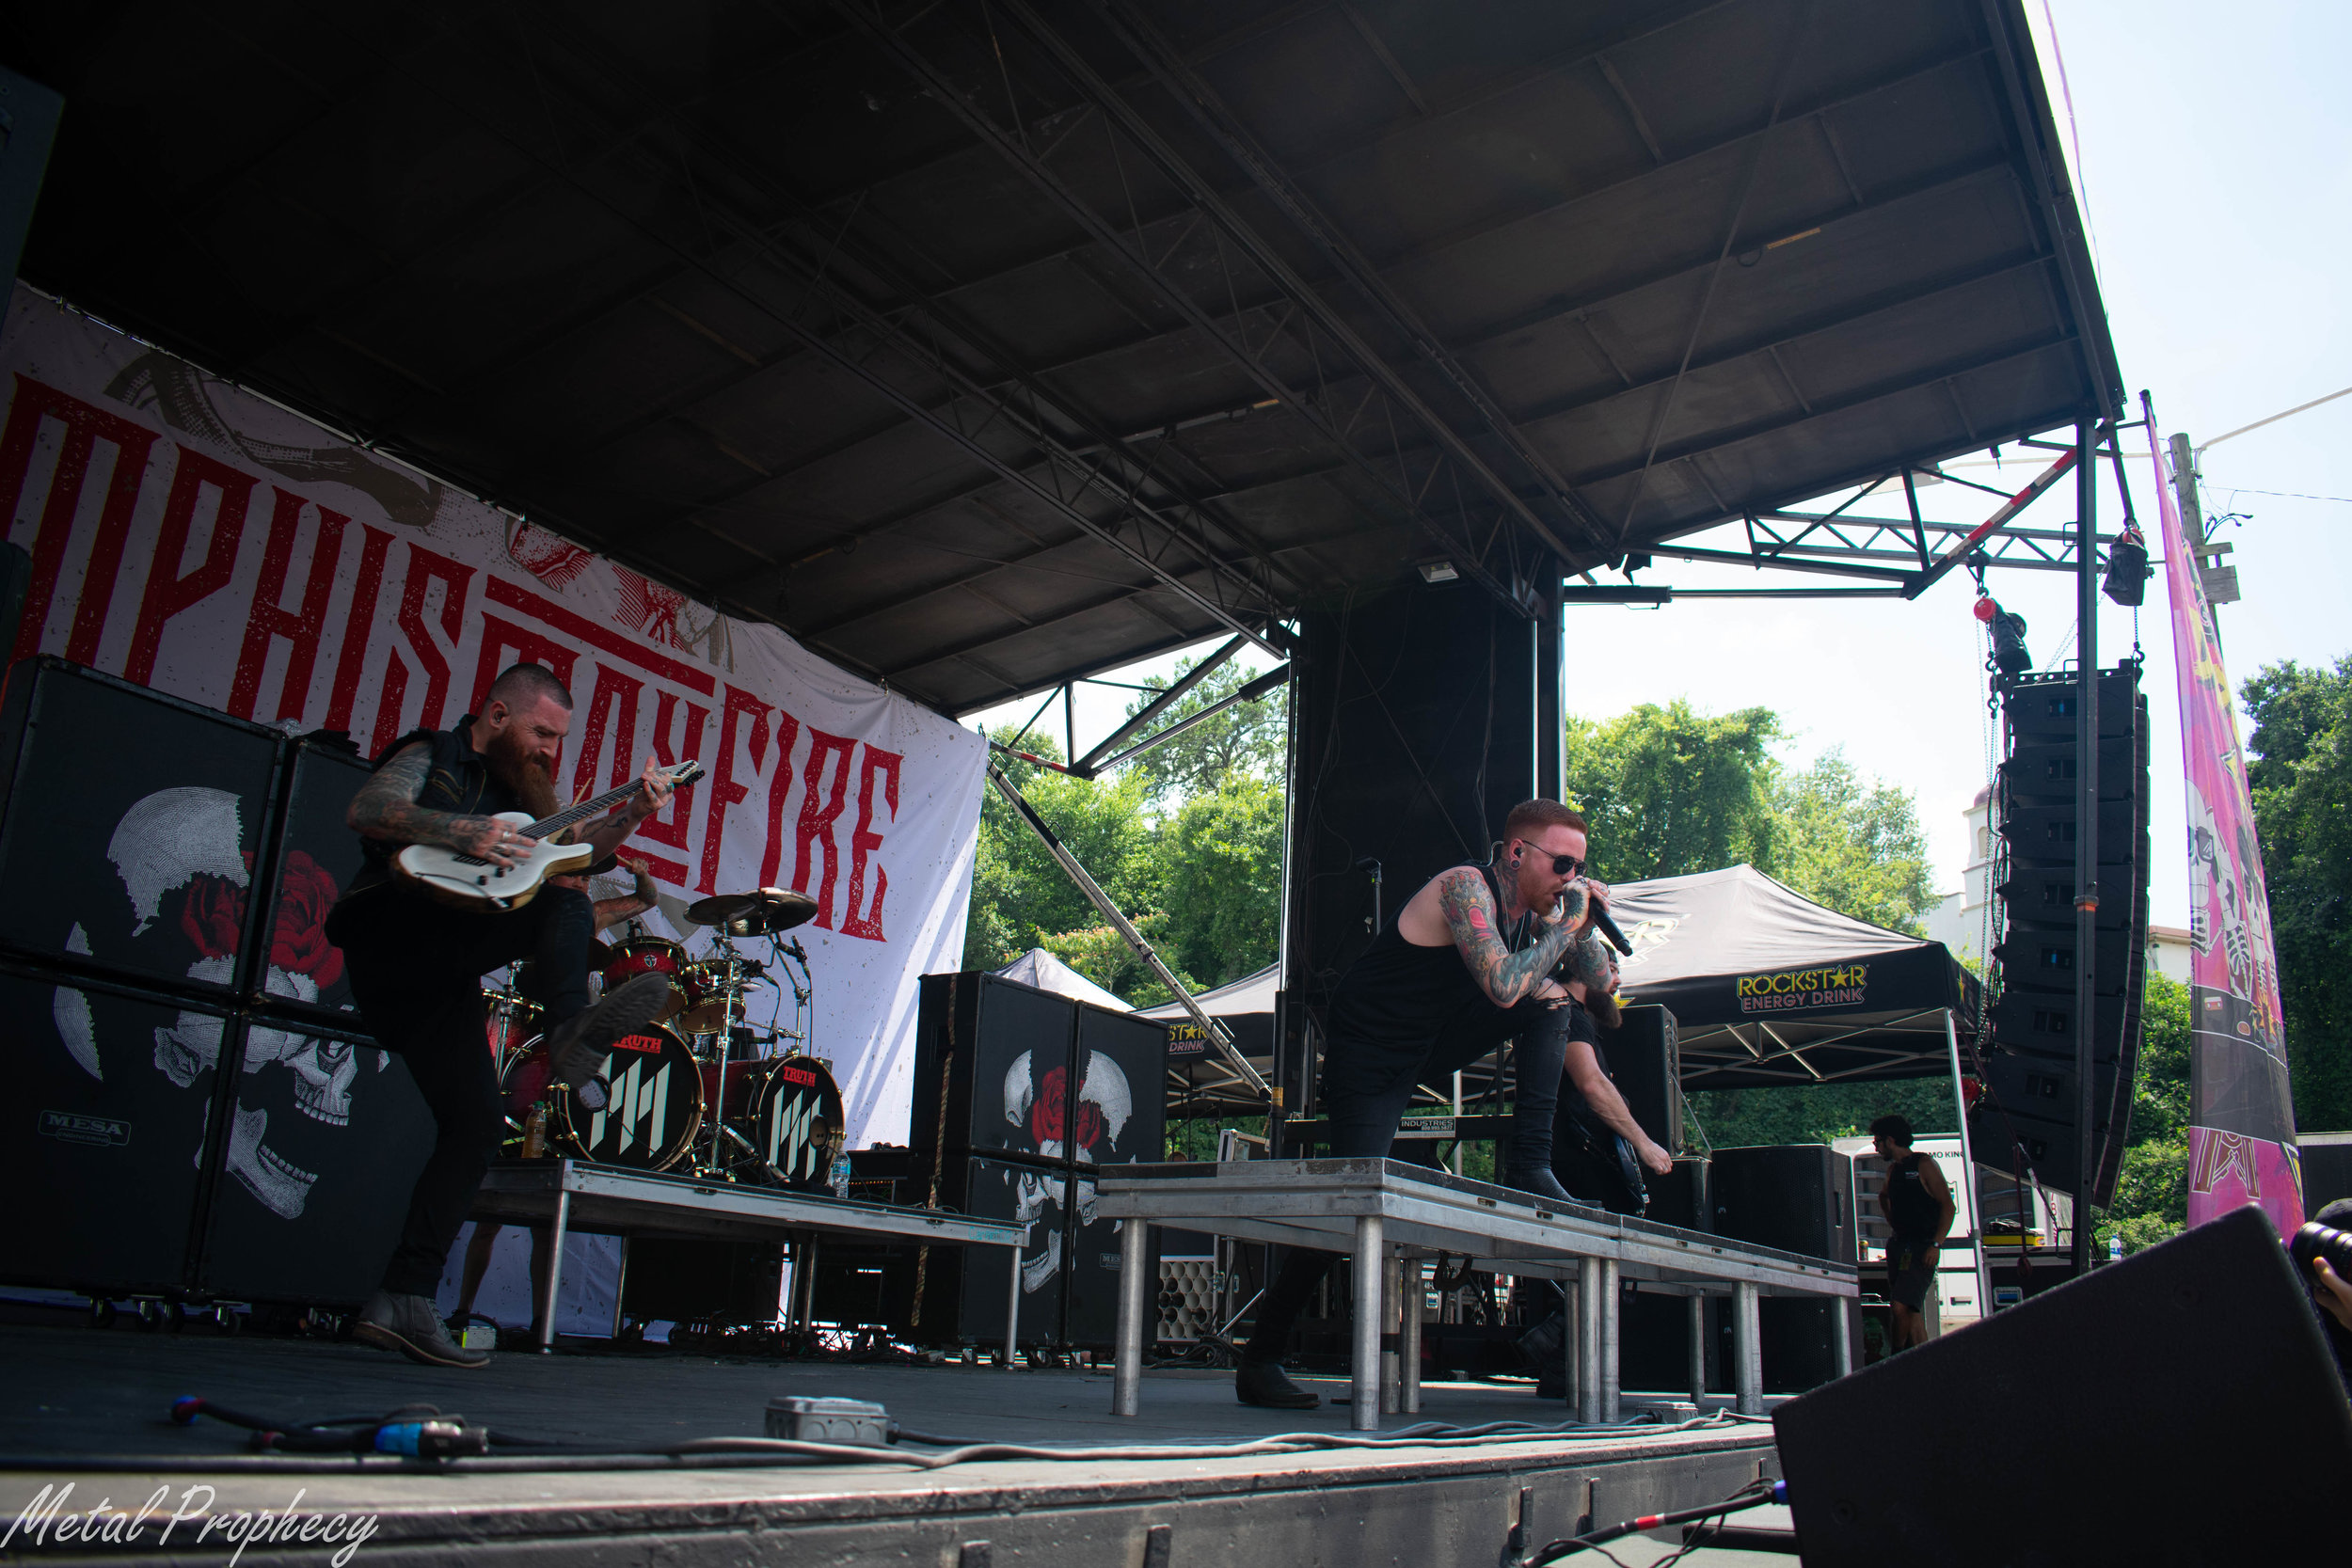 Memphis May Fire at Rockstar Energy Disrupt Festival